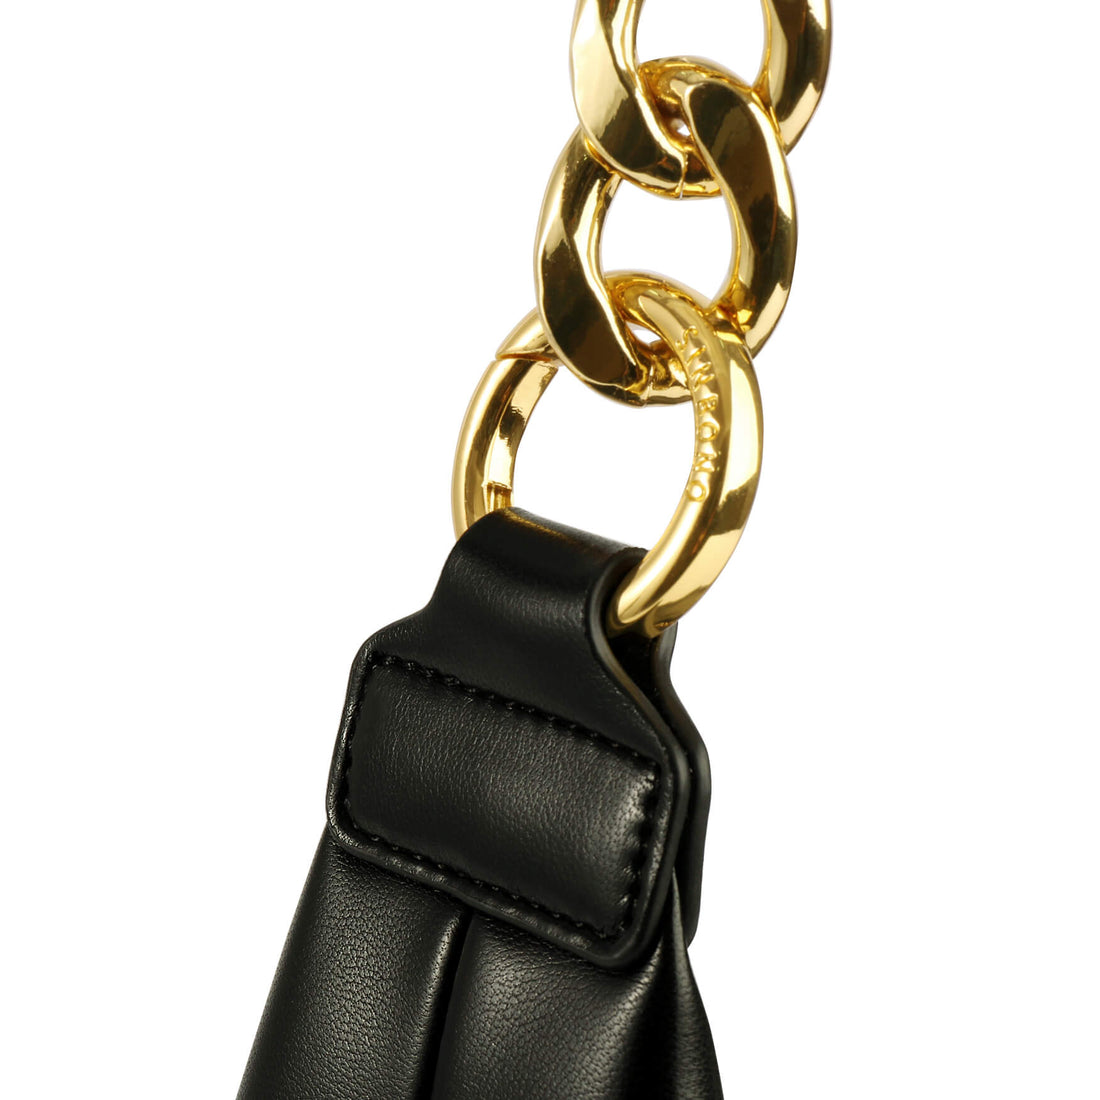 SINBONO Black Shoulder Satchel Crossbody Women's Handbags